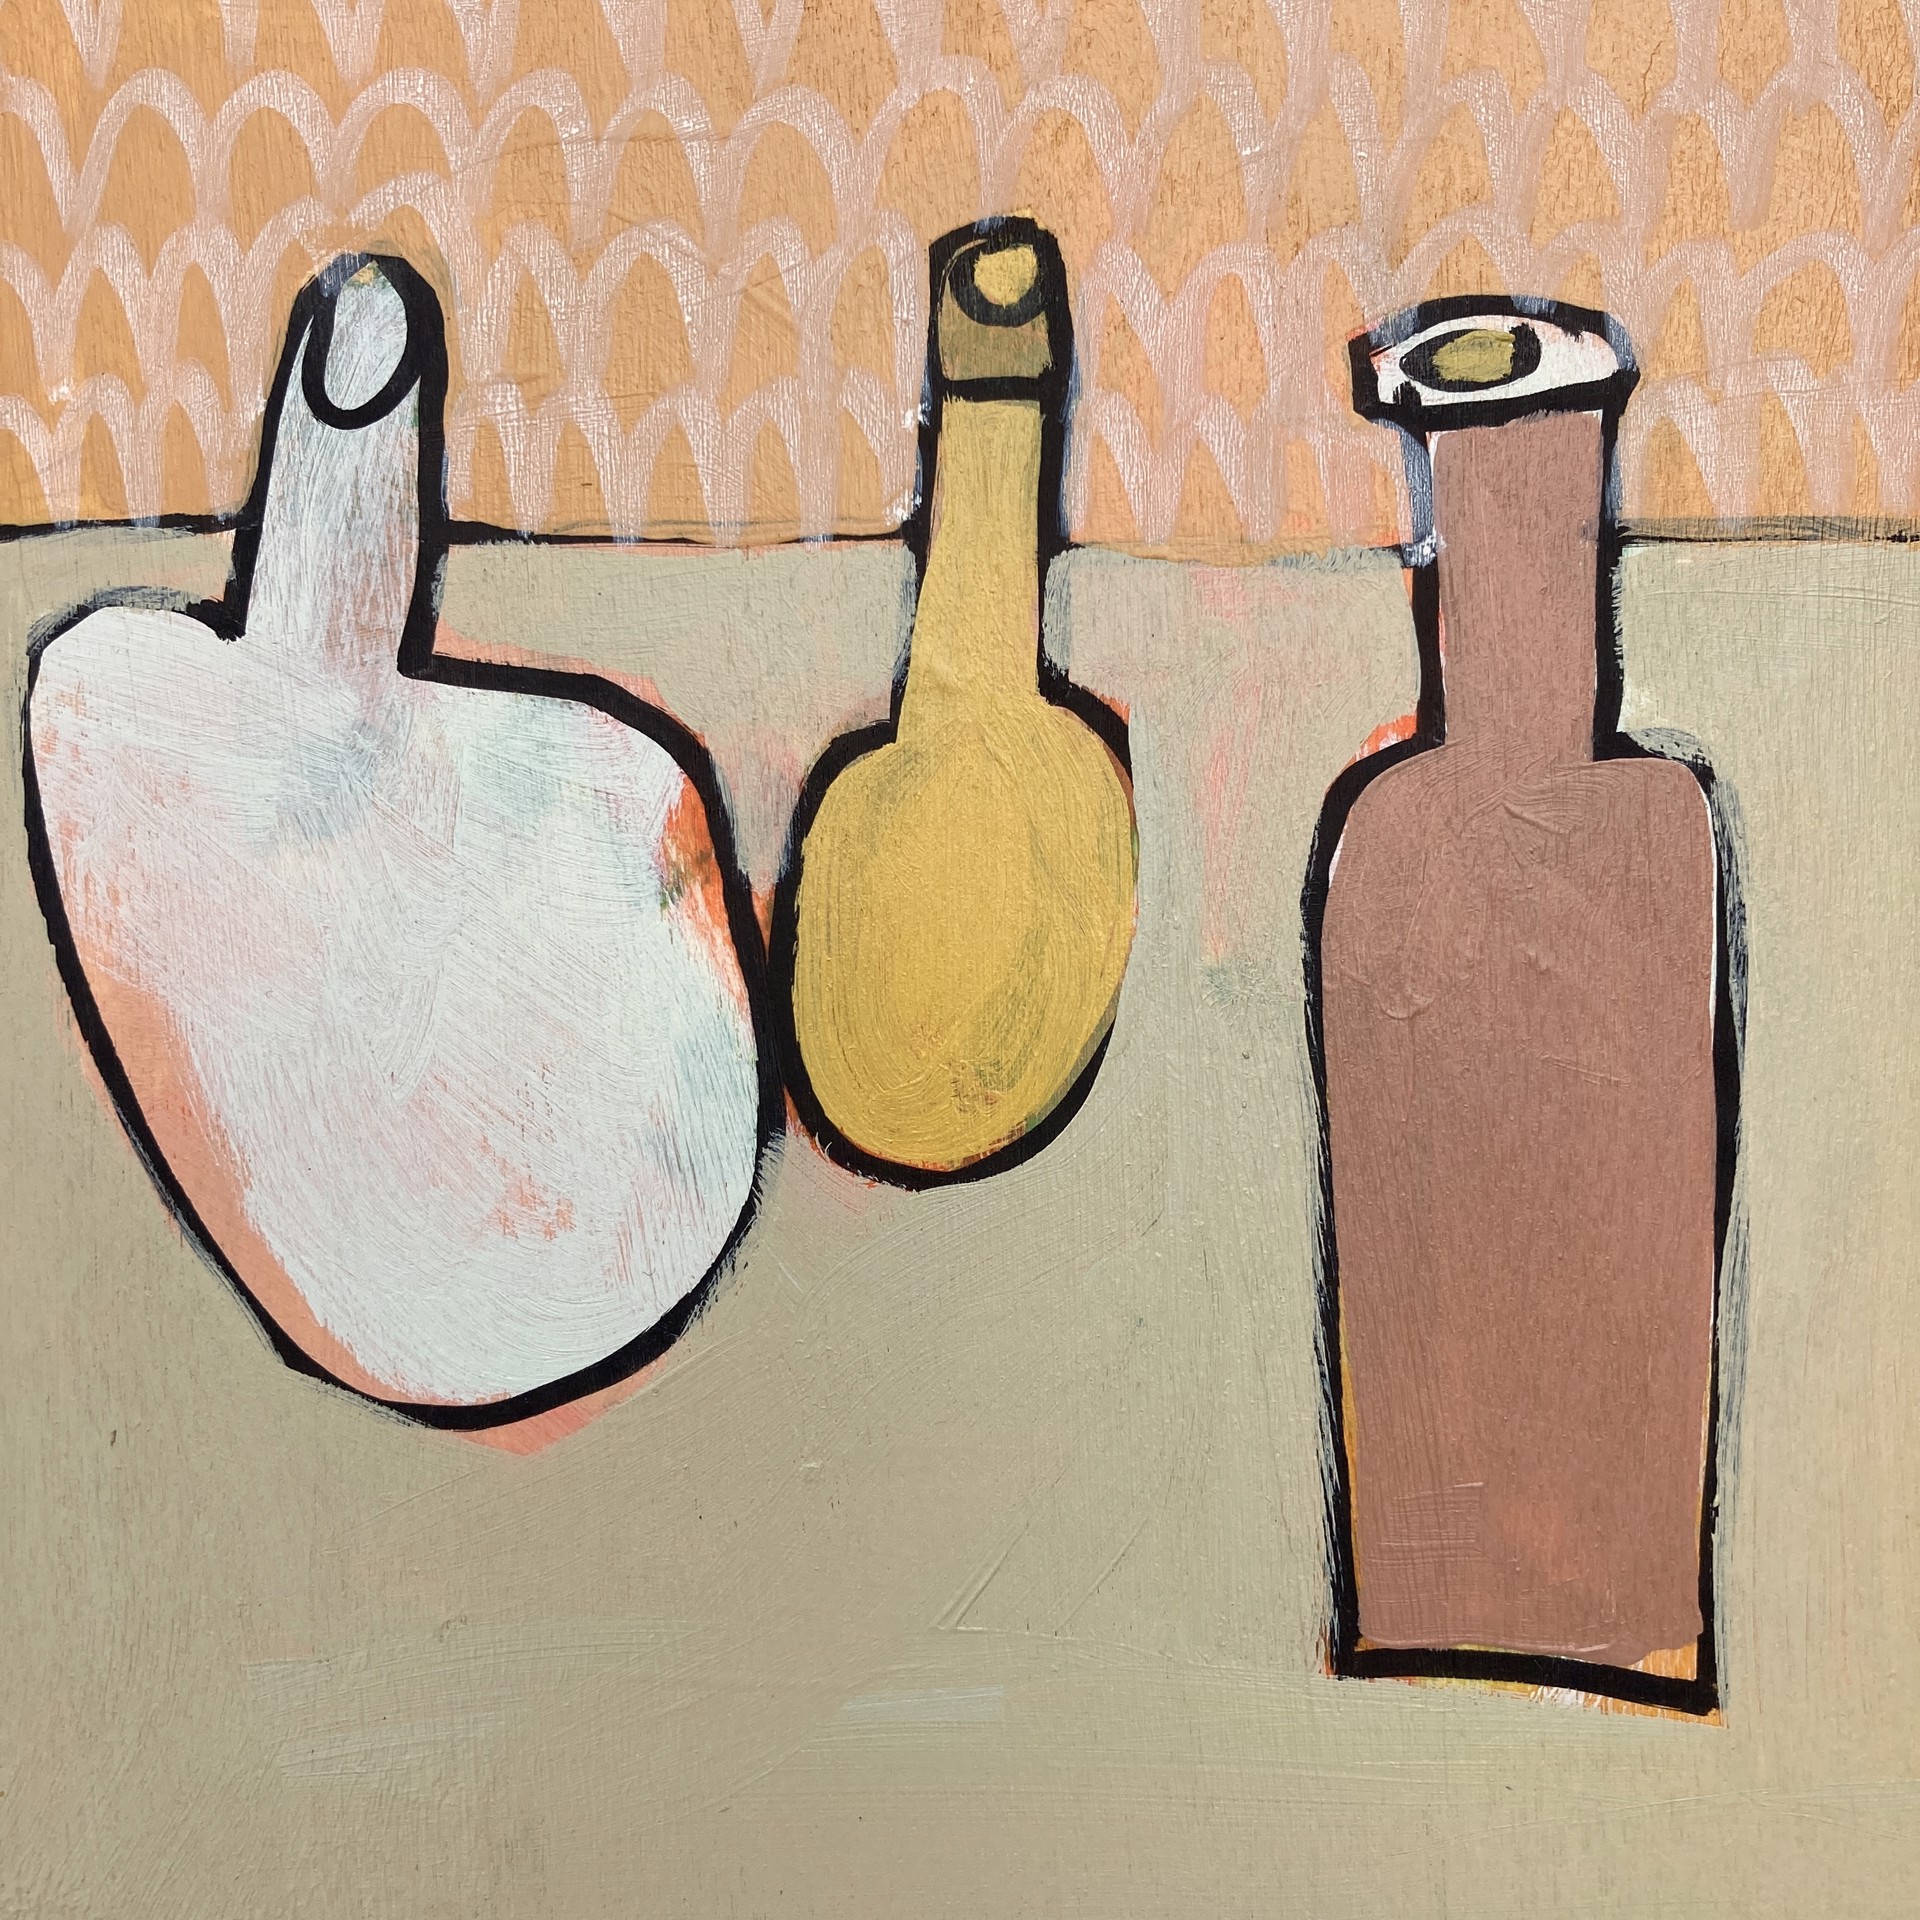 Pale Blue, Mustard Yellow, and Mauve Bottles by Rachael Van Dyke